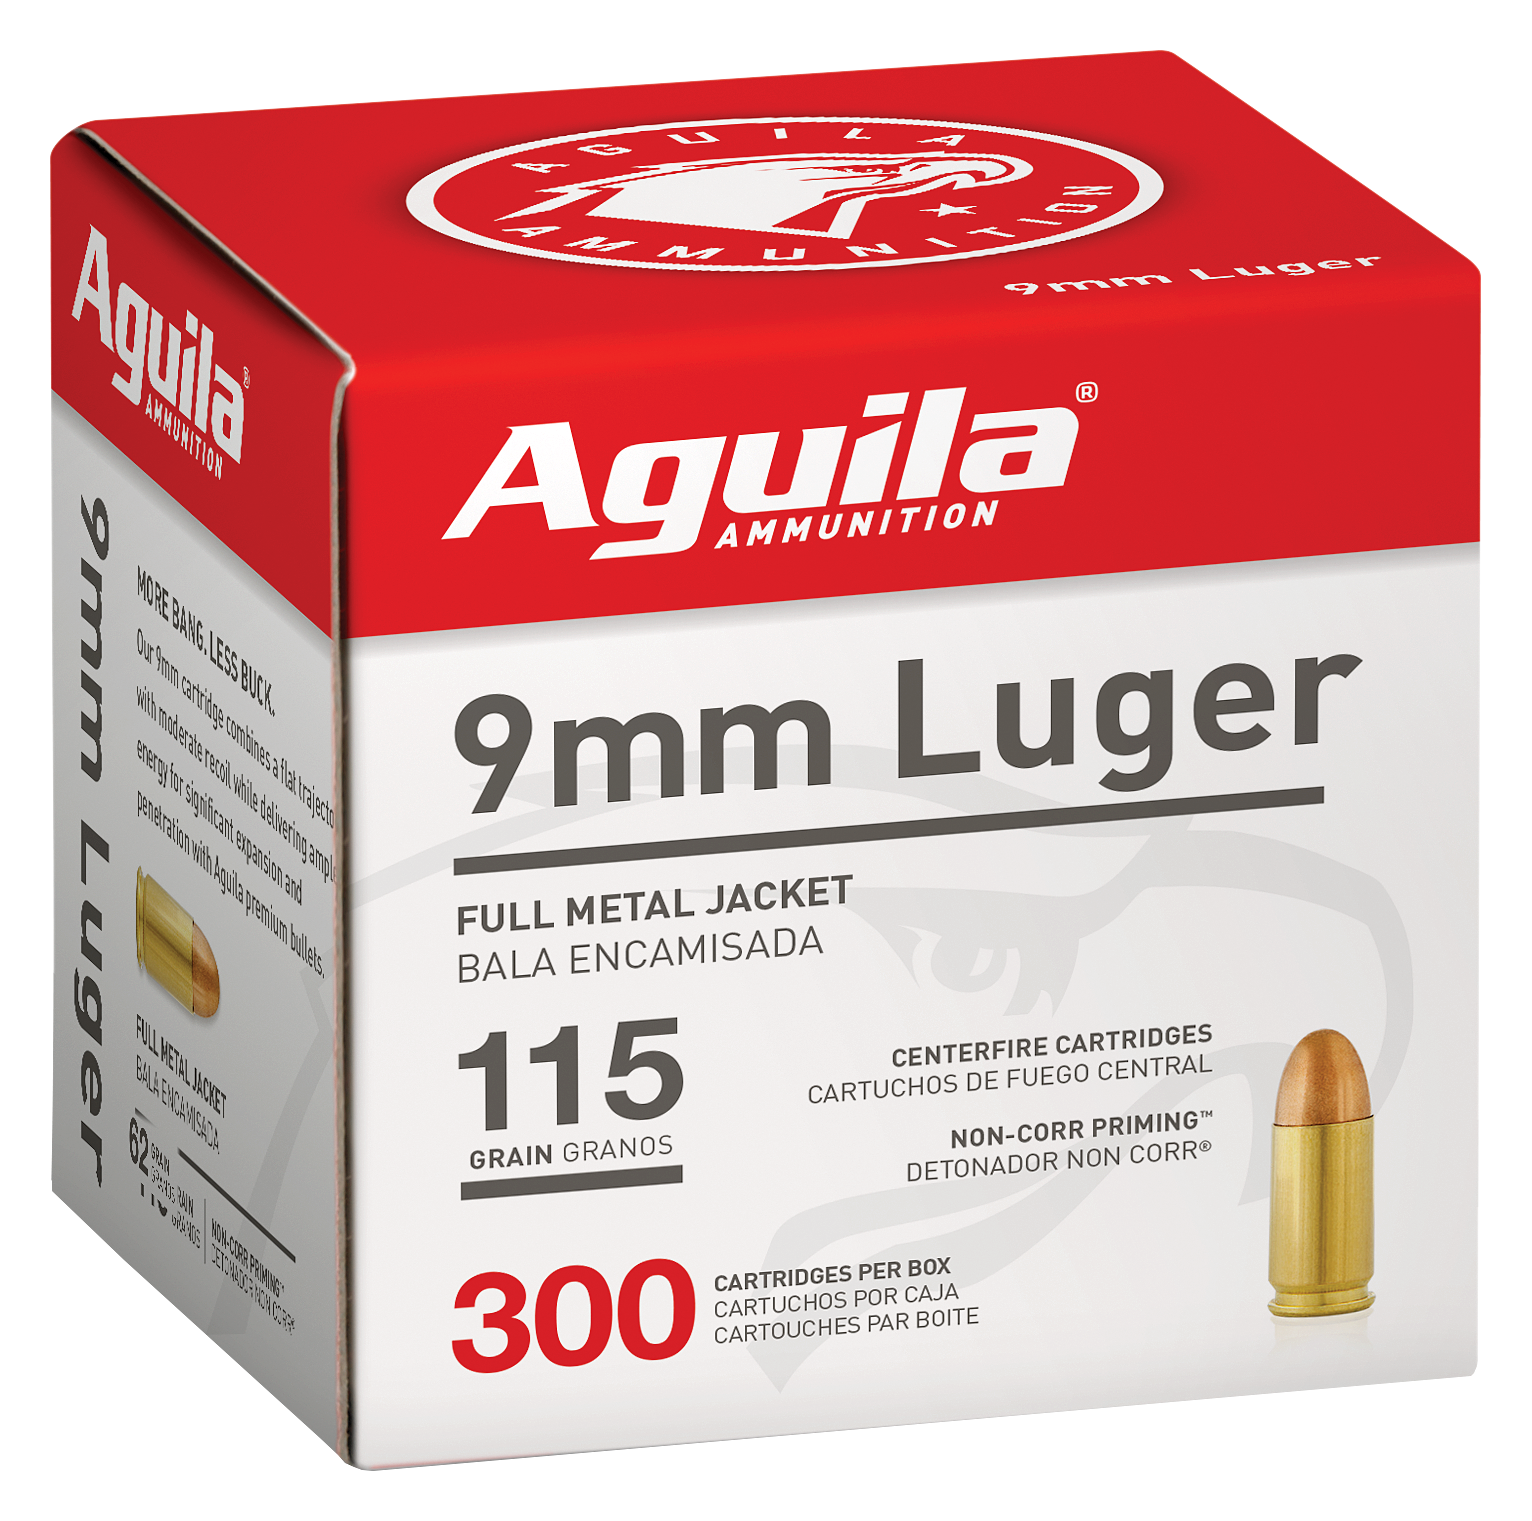 Aguila Full Metal Jacket Centerfire Handgun Ammo - 9mm Luger - 124 Grain